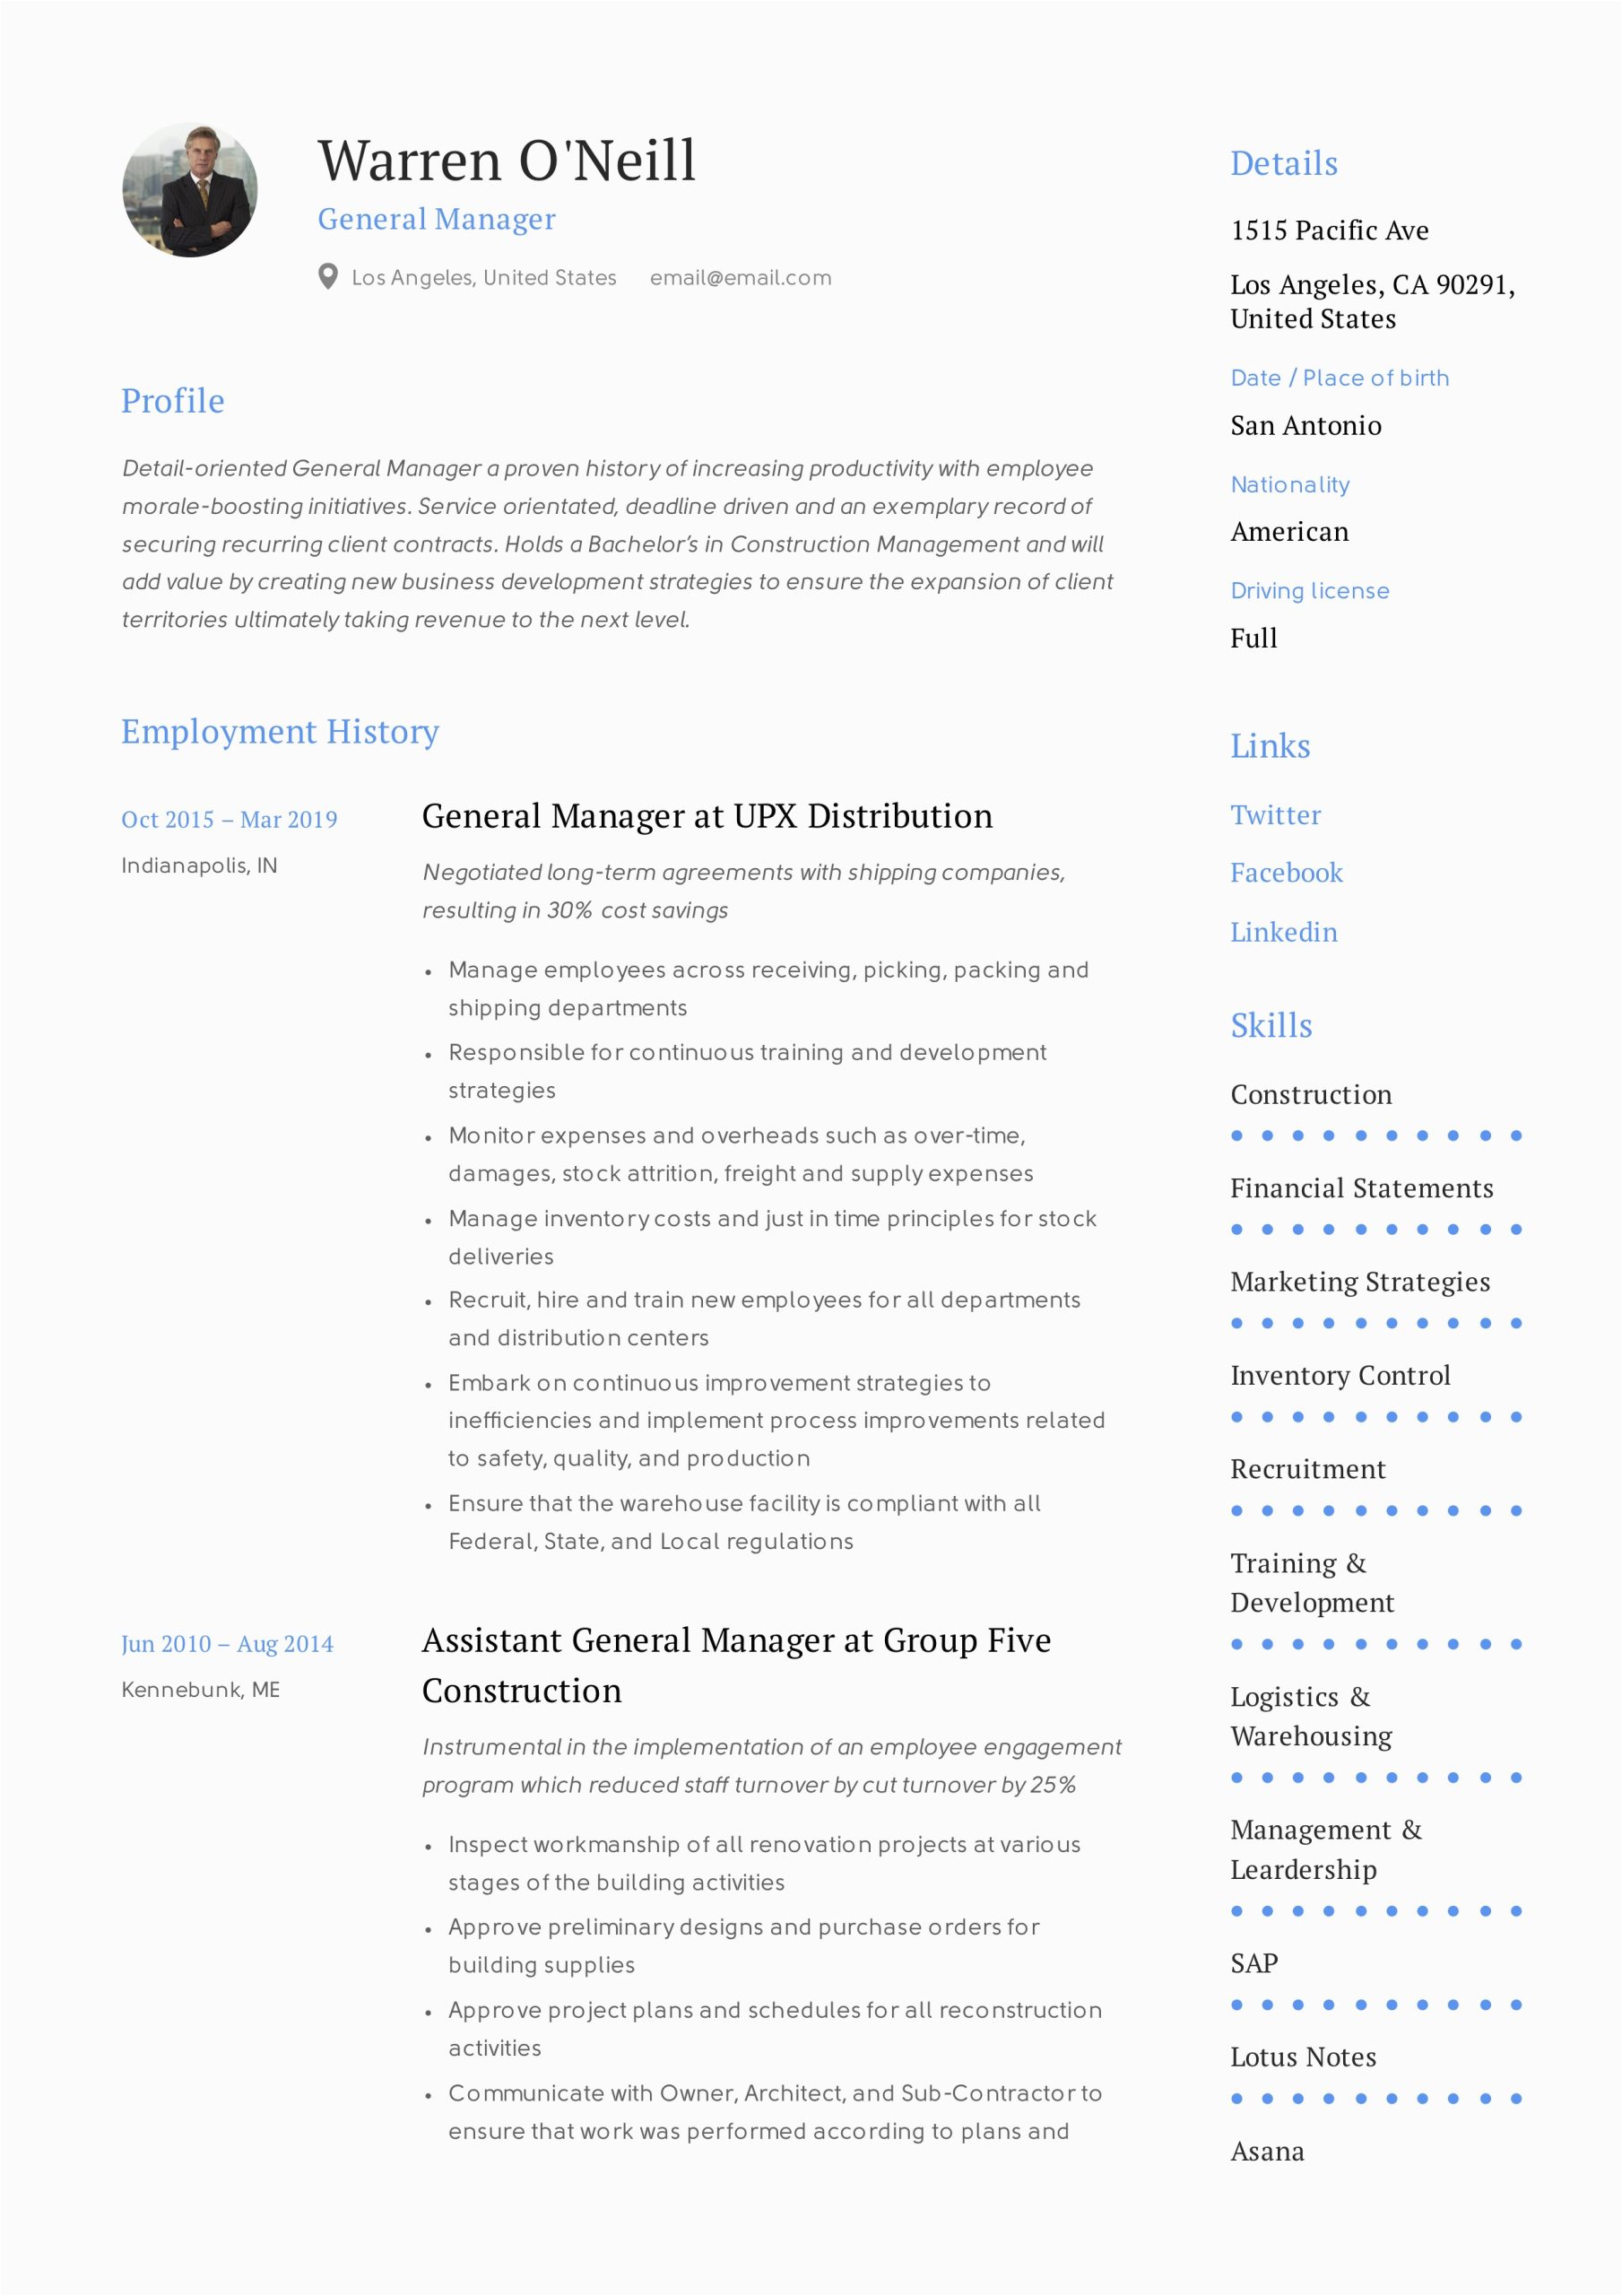 Free Resume Samples Online for General Manager General Manager Resume & Writing Guide 12 Resume Examples